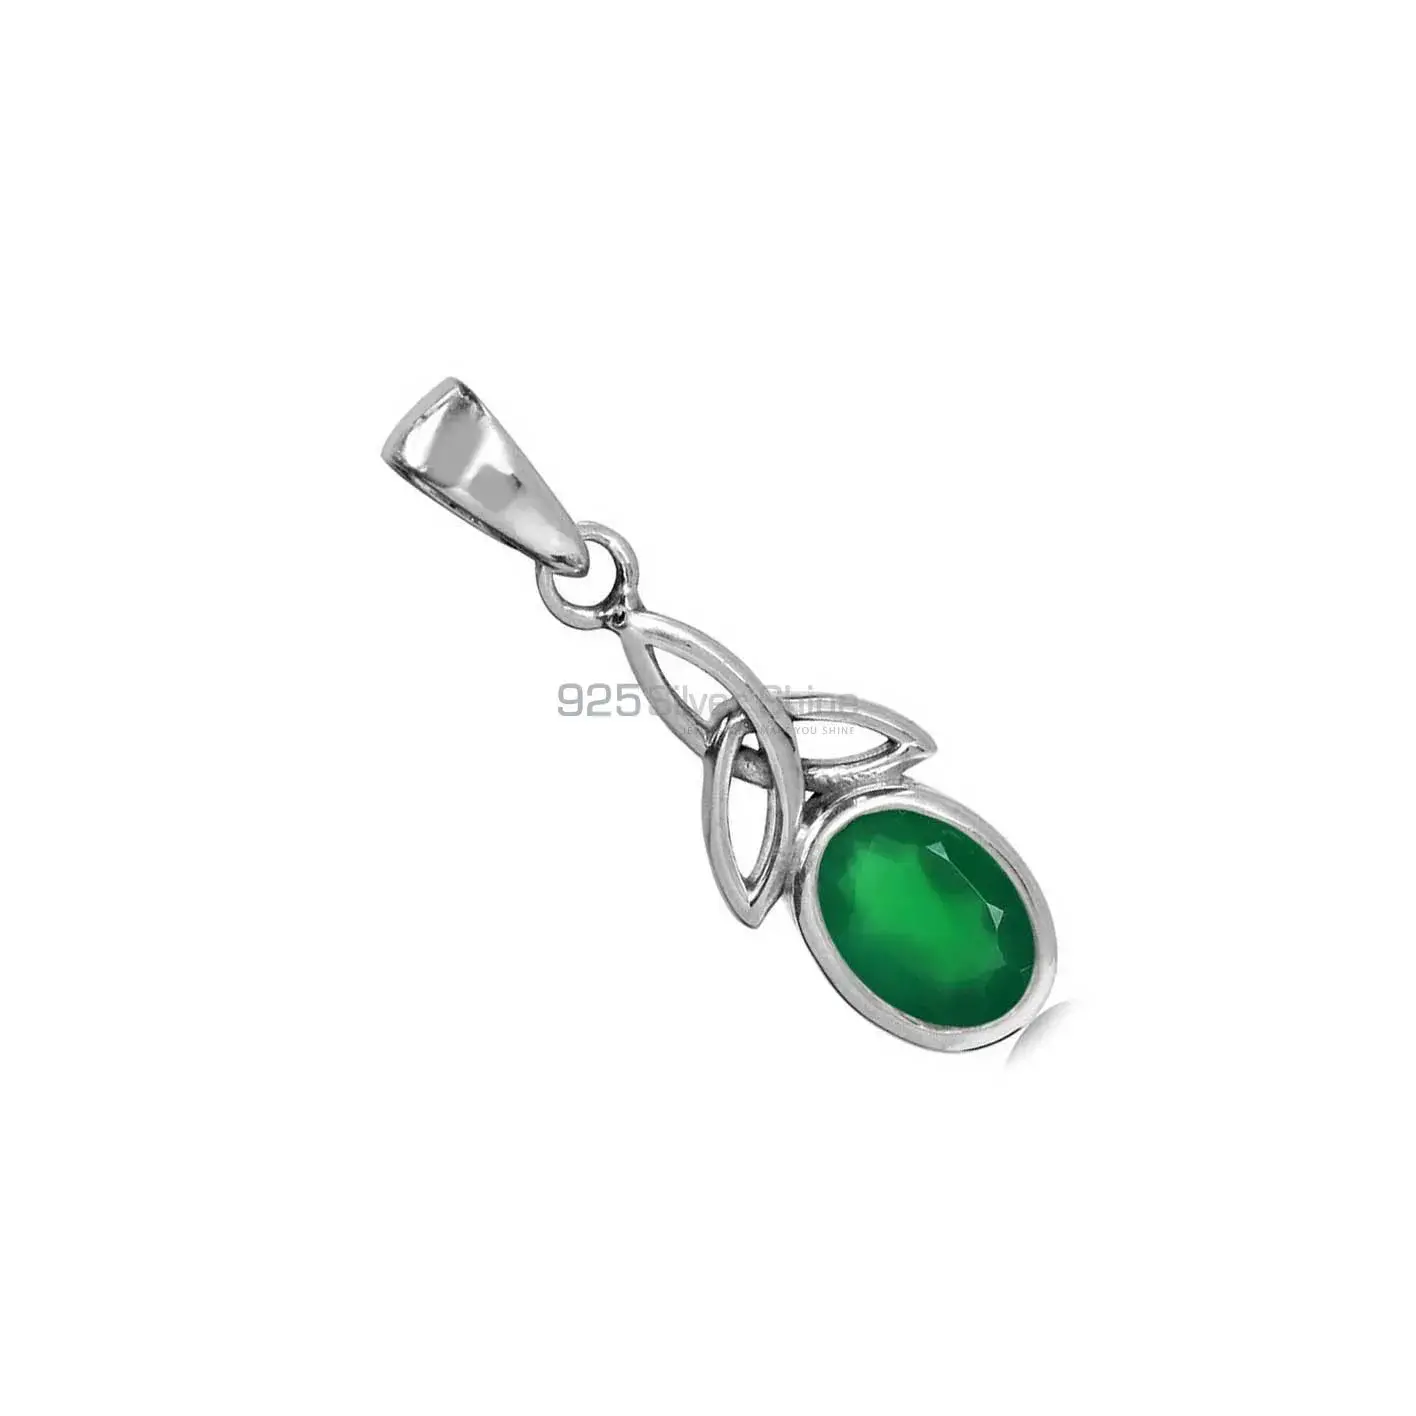 Wholesale Solid Sterling Silver Handmade Pendants In Green Onyx Gemstone Jewelry 925SP06-1_1